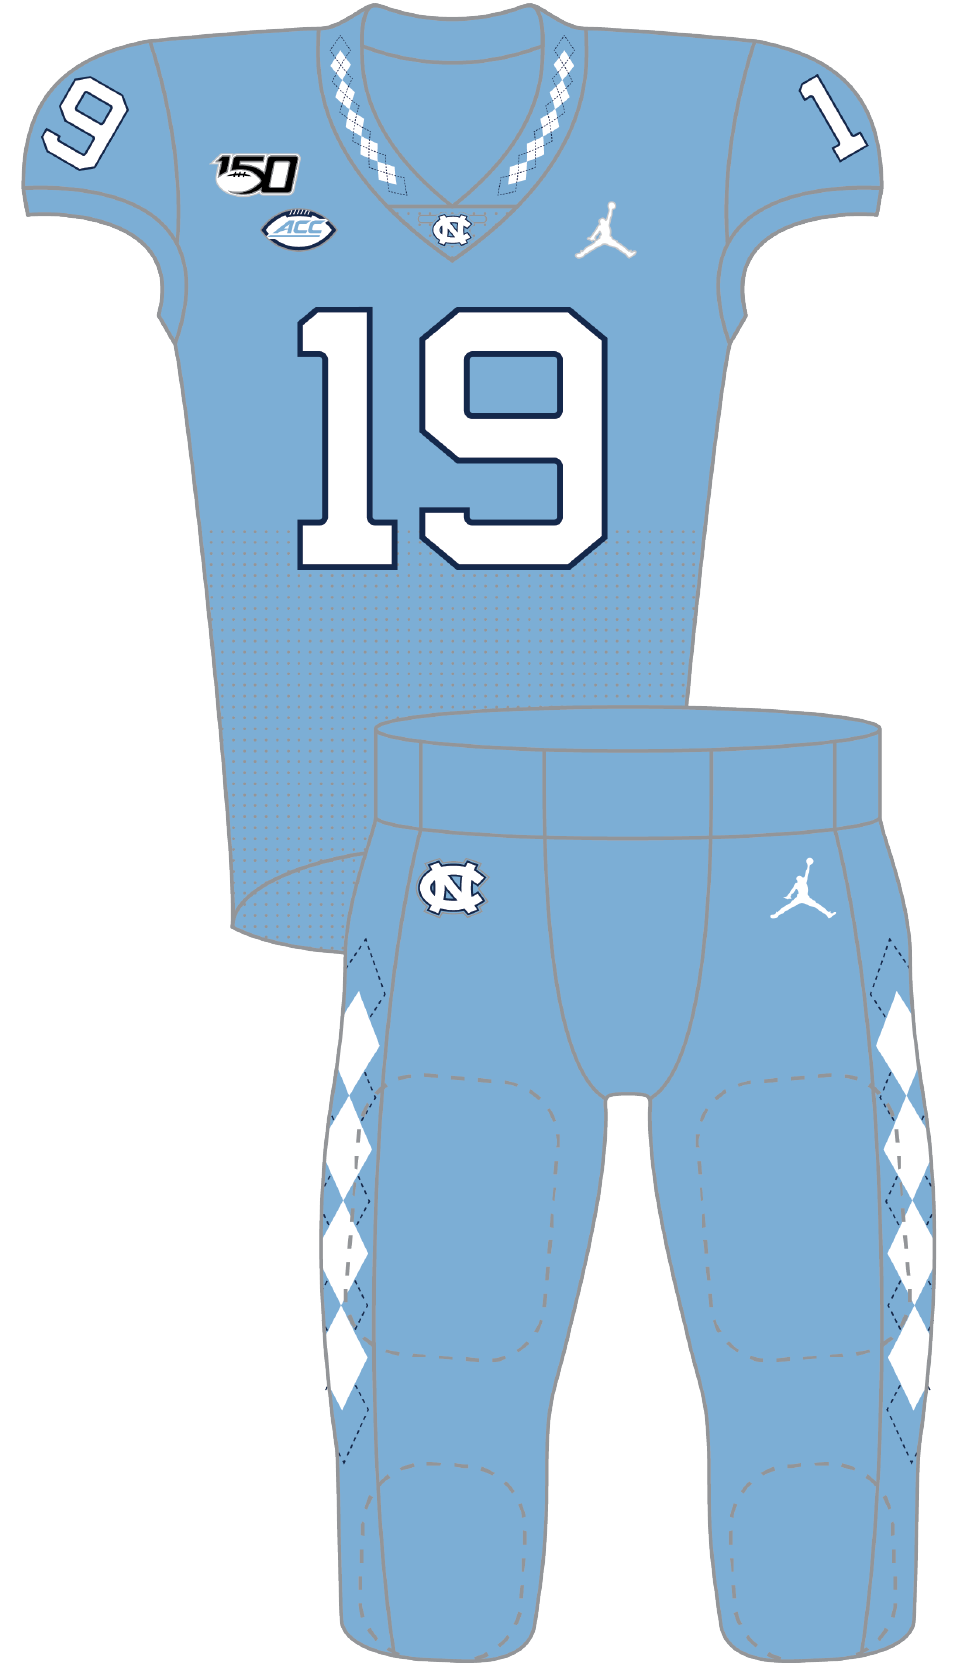 North Carolina 2019 Blue Uniform